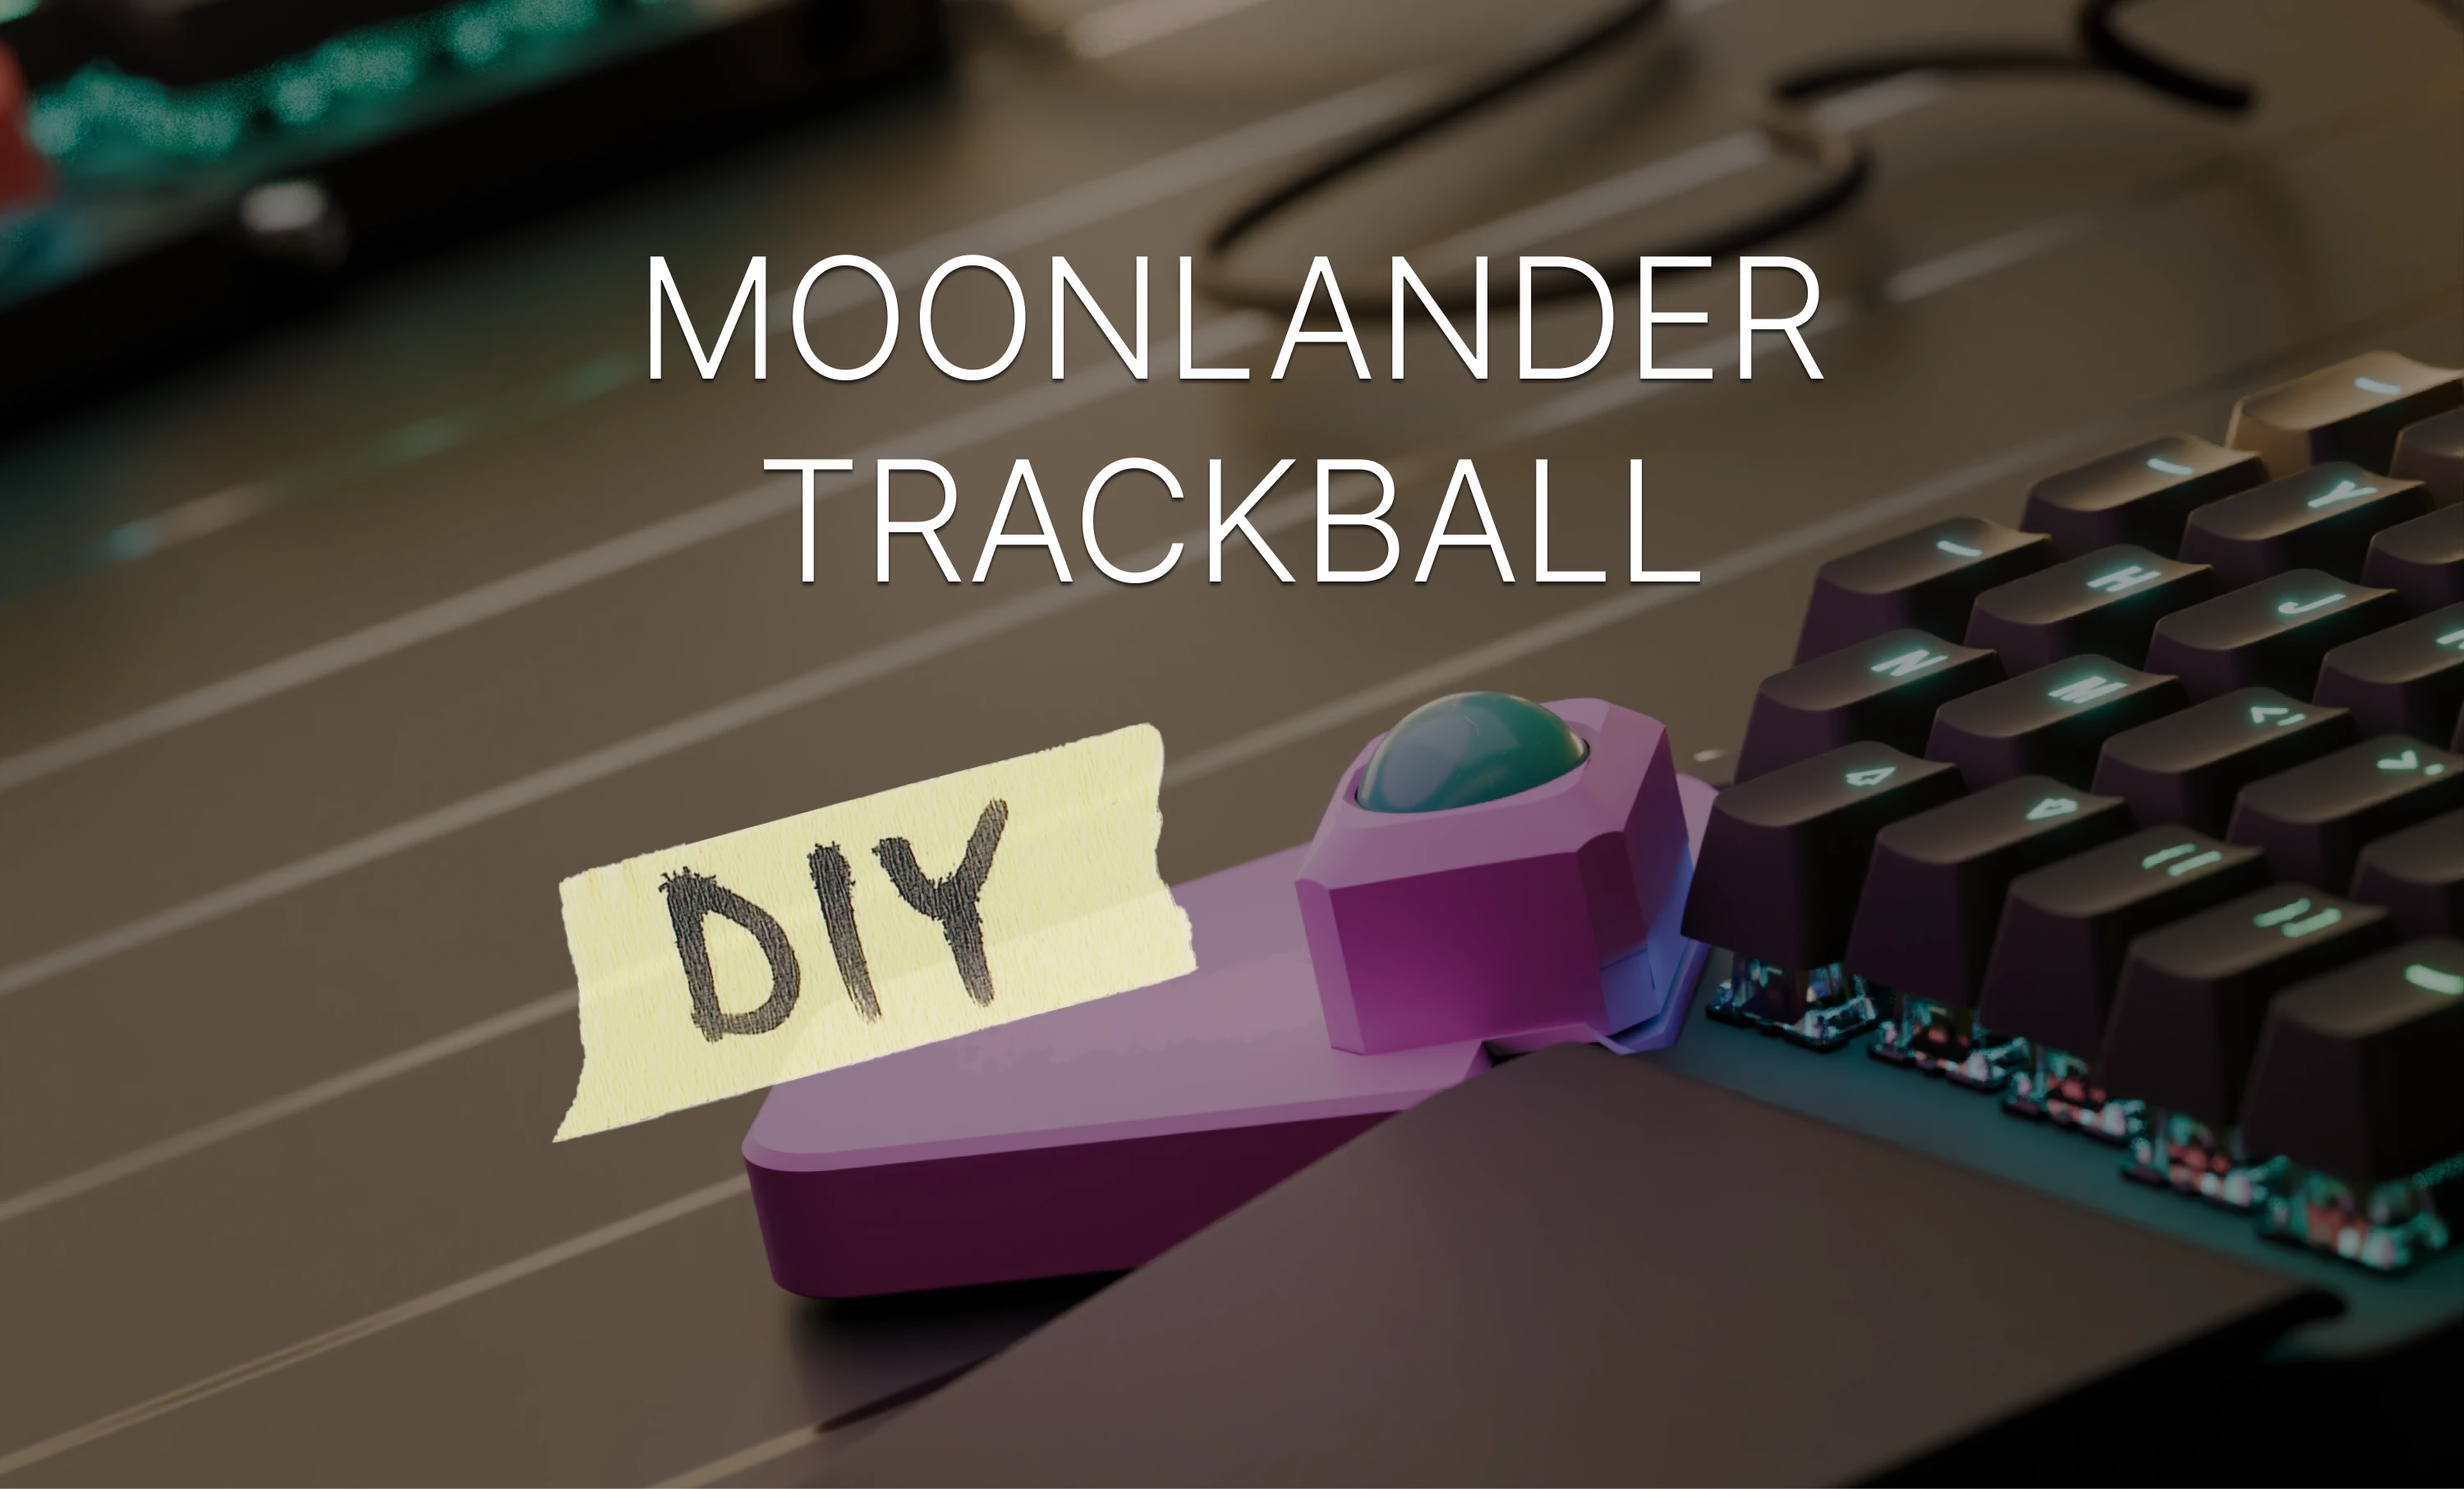 Adding a trackball to the Moonlander